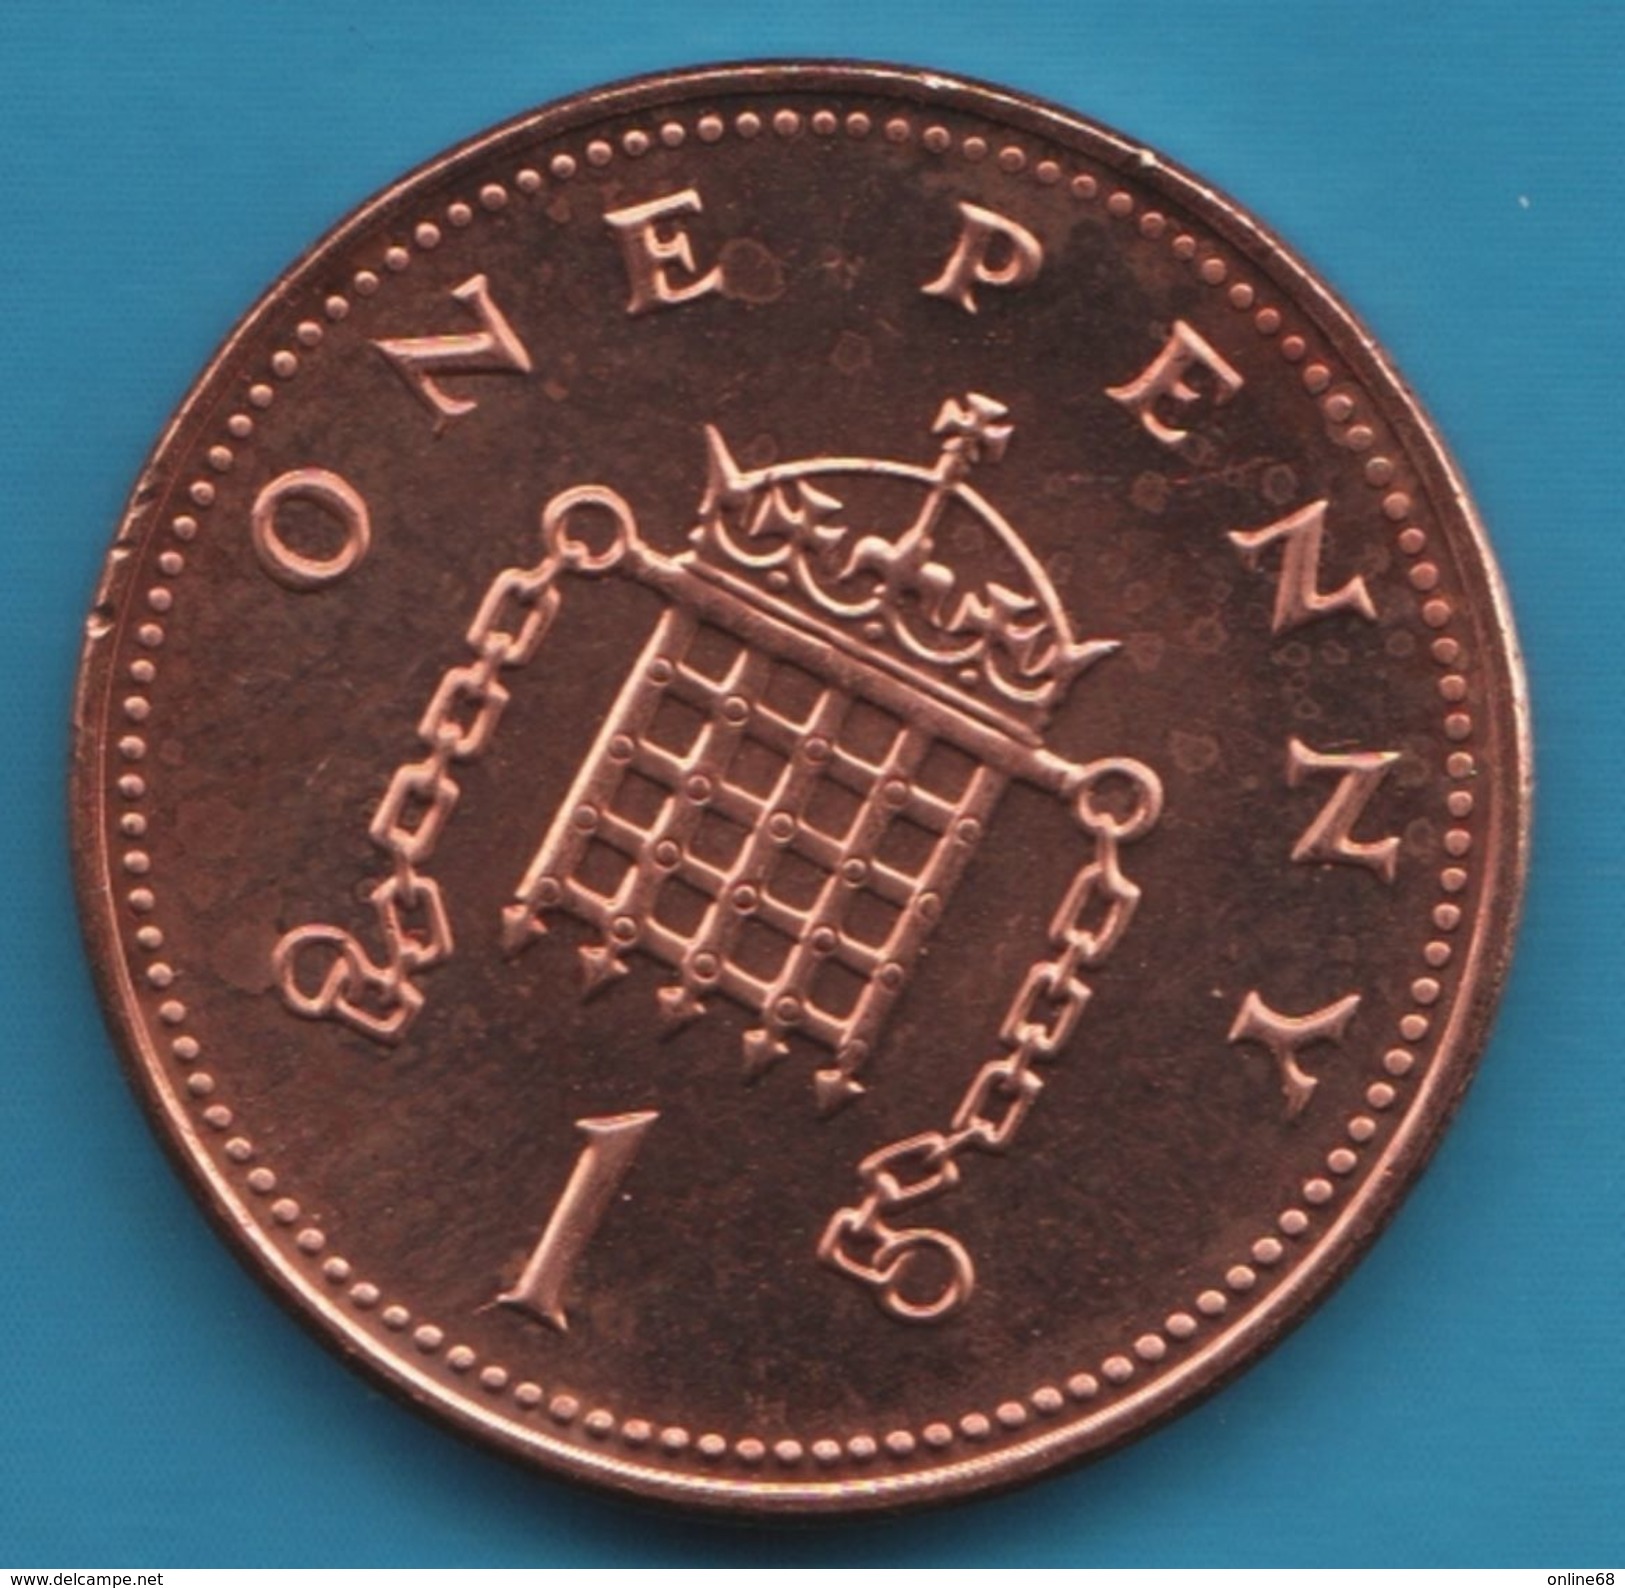 GB 1 PENNY 2005 QEII - 1 Penny & 1 New Penny